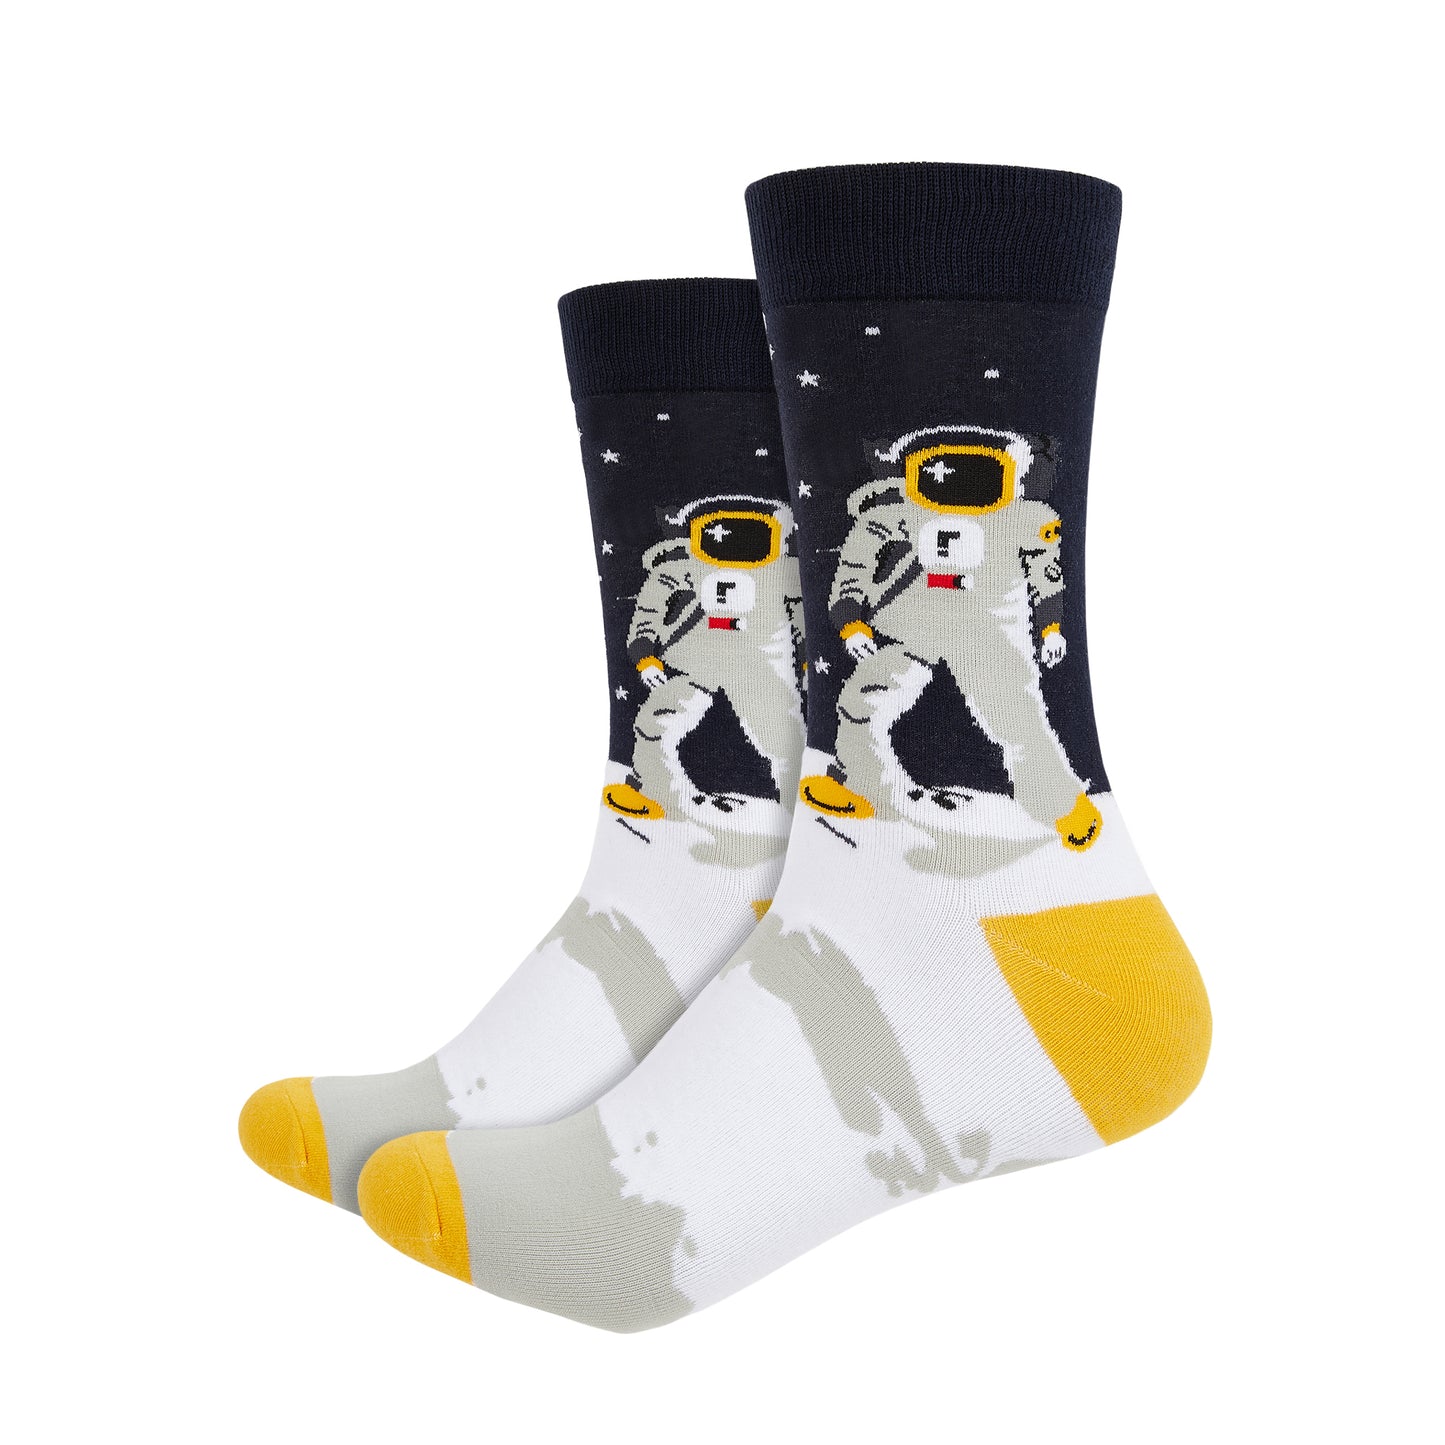 Neil Armstrong Printed Crew Length Socks - IDENTITY Apparel Shop